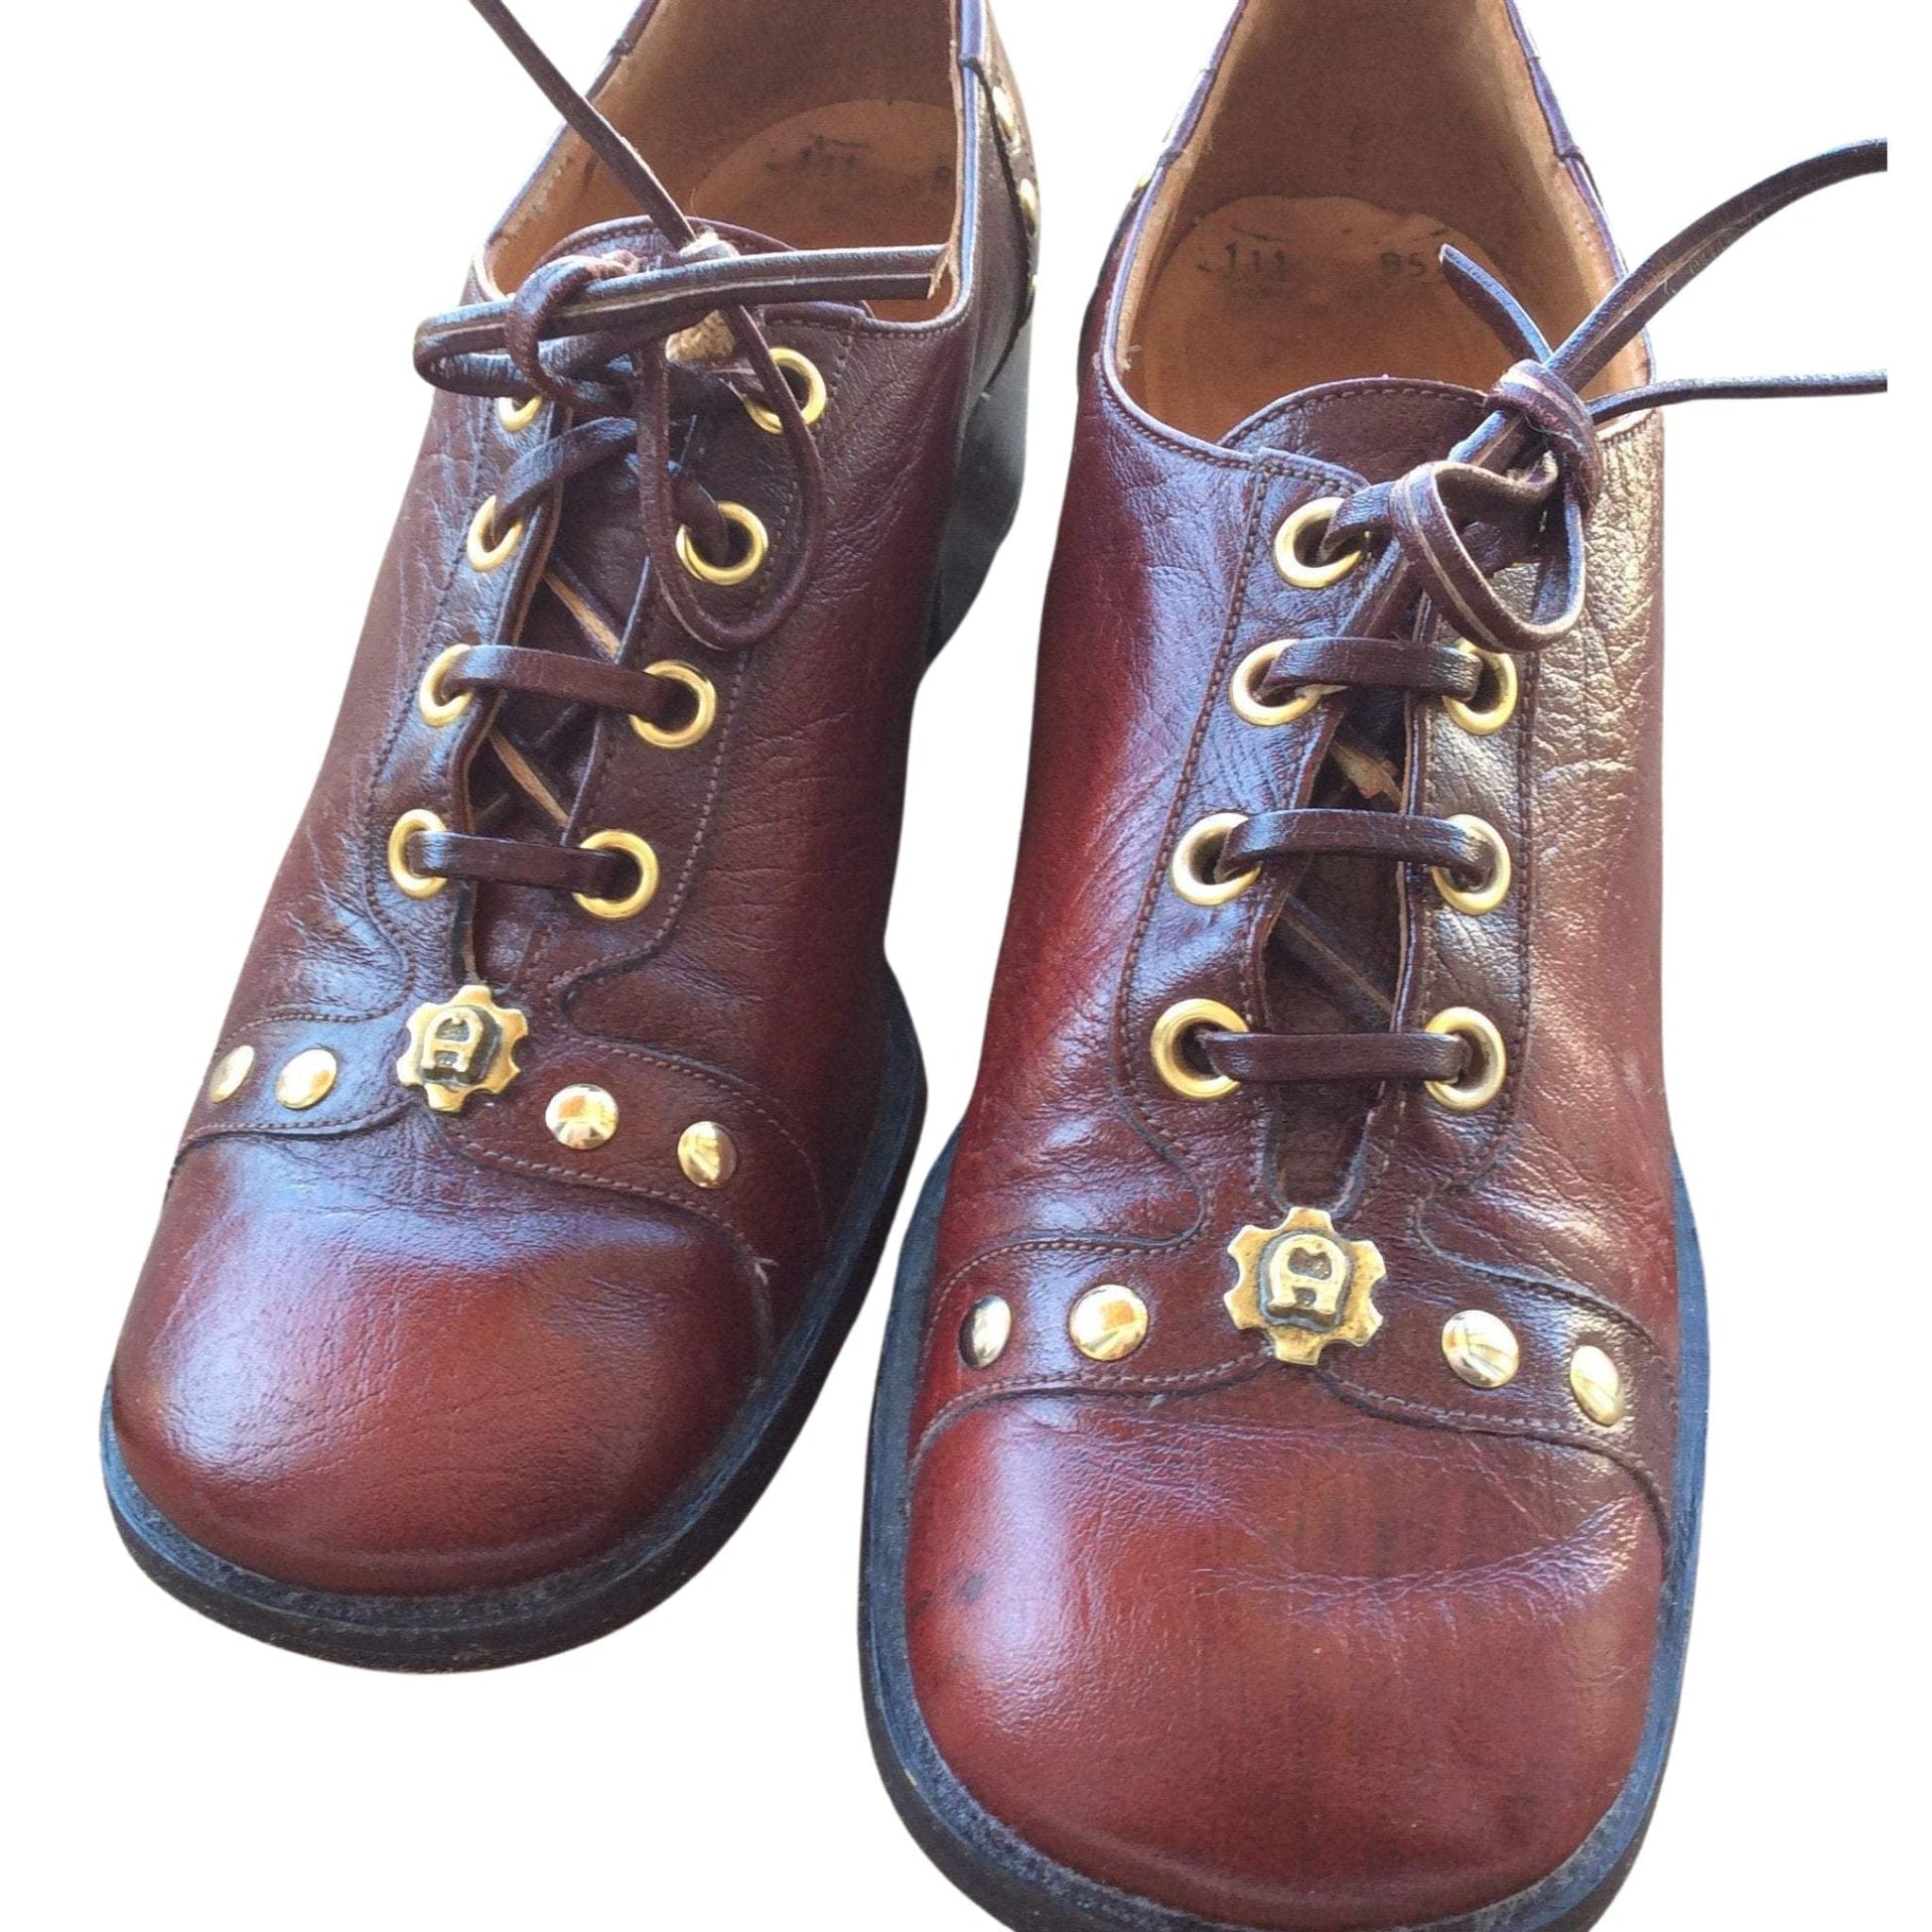 Aigner Studded Oxford Shoes 5.5 / Burgundy / Mod